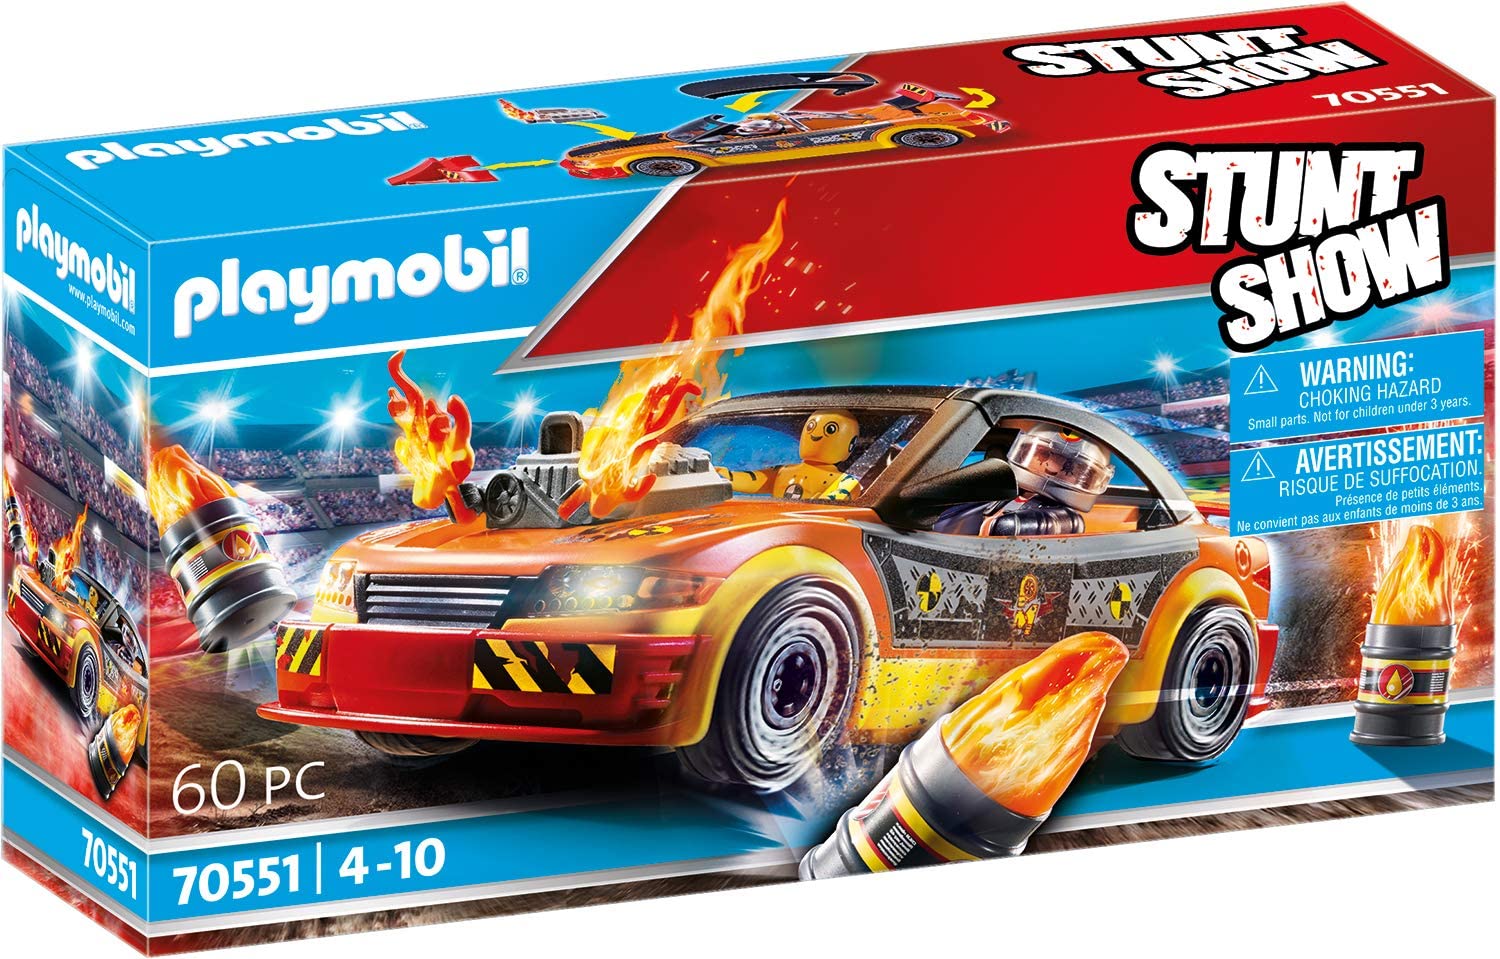 Playmobil Stuntshow 70551 Crashcar. For children aged 4 - 10 years.